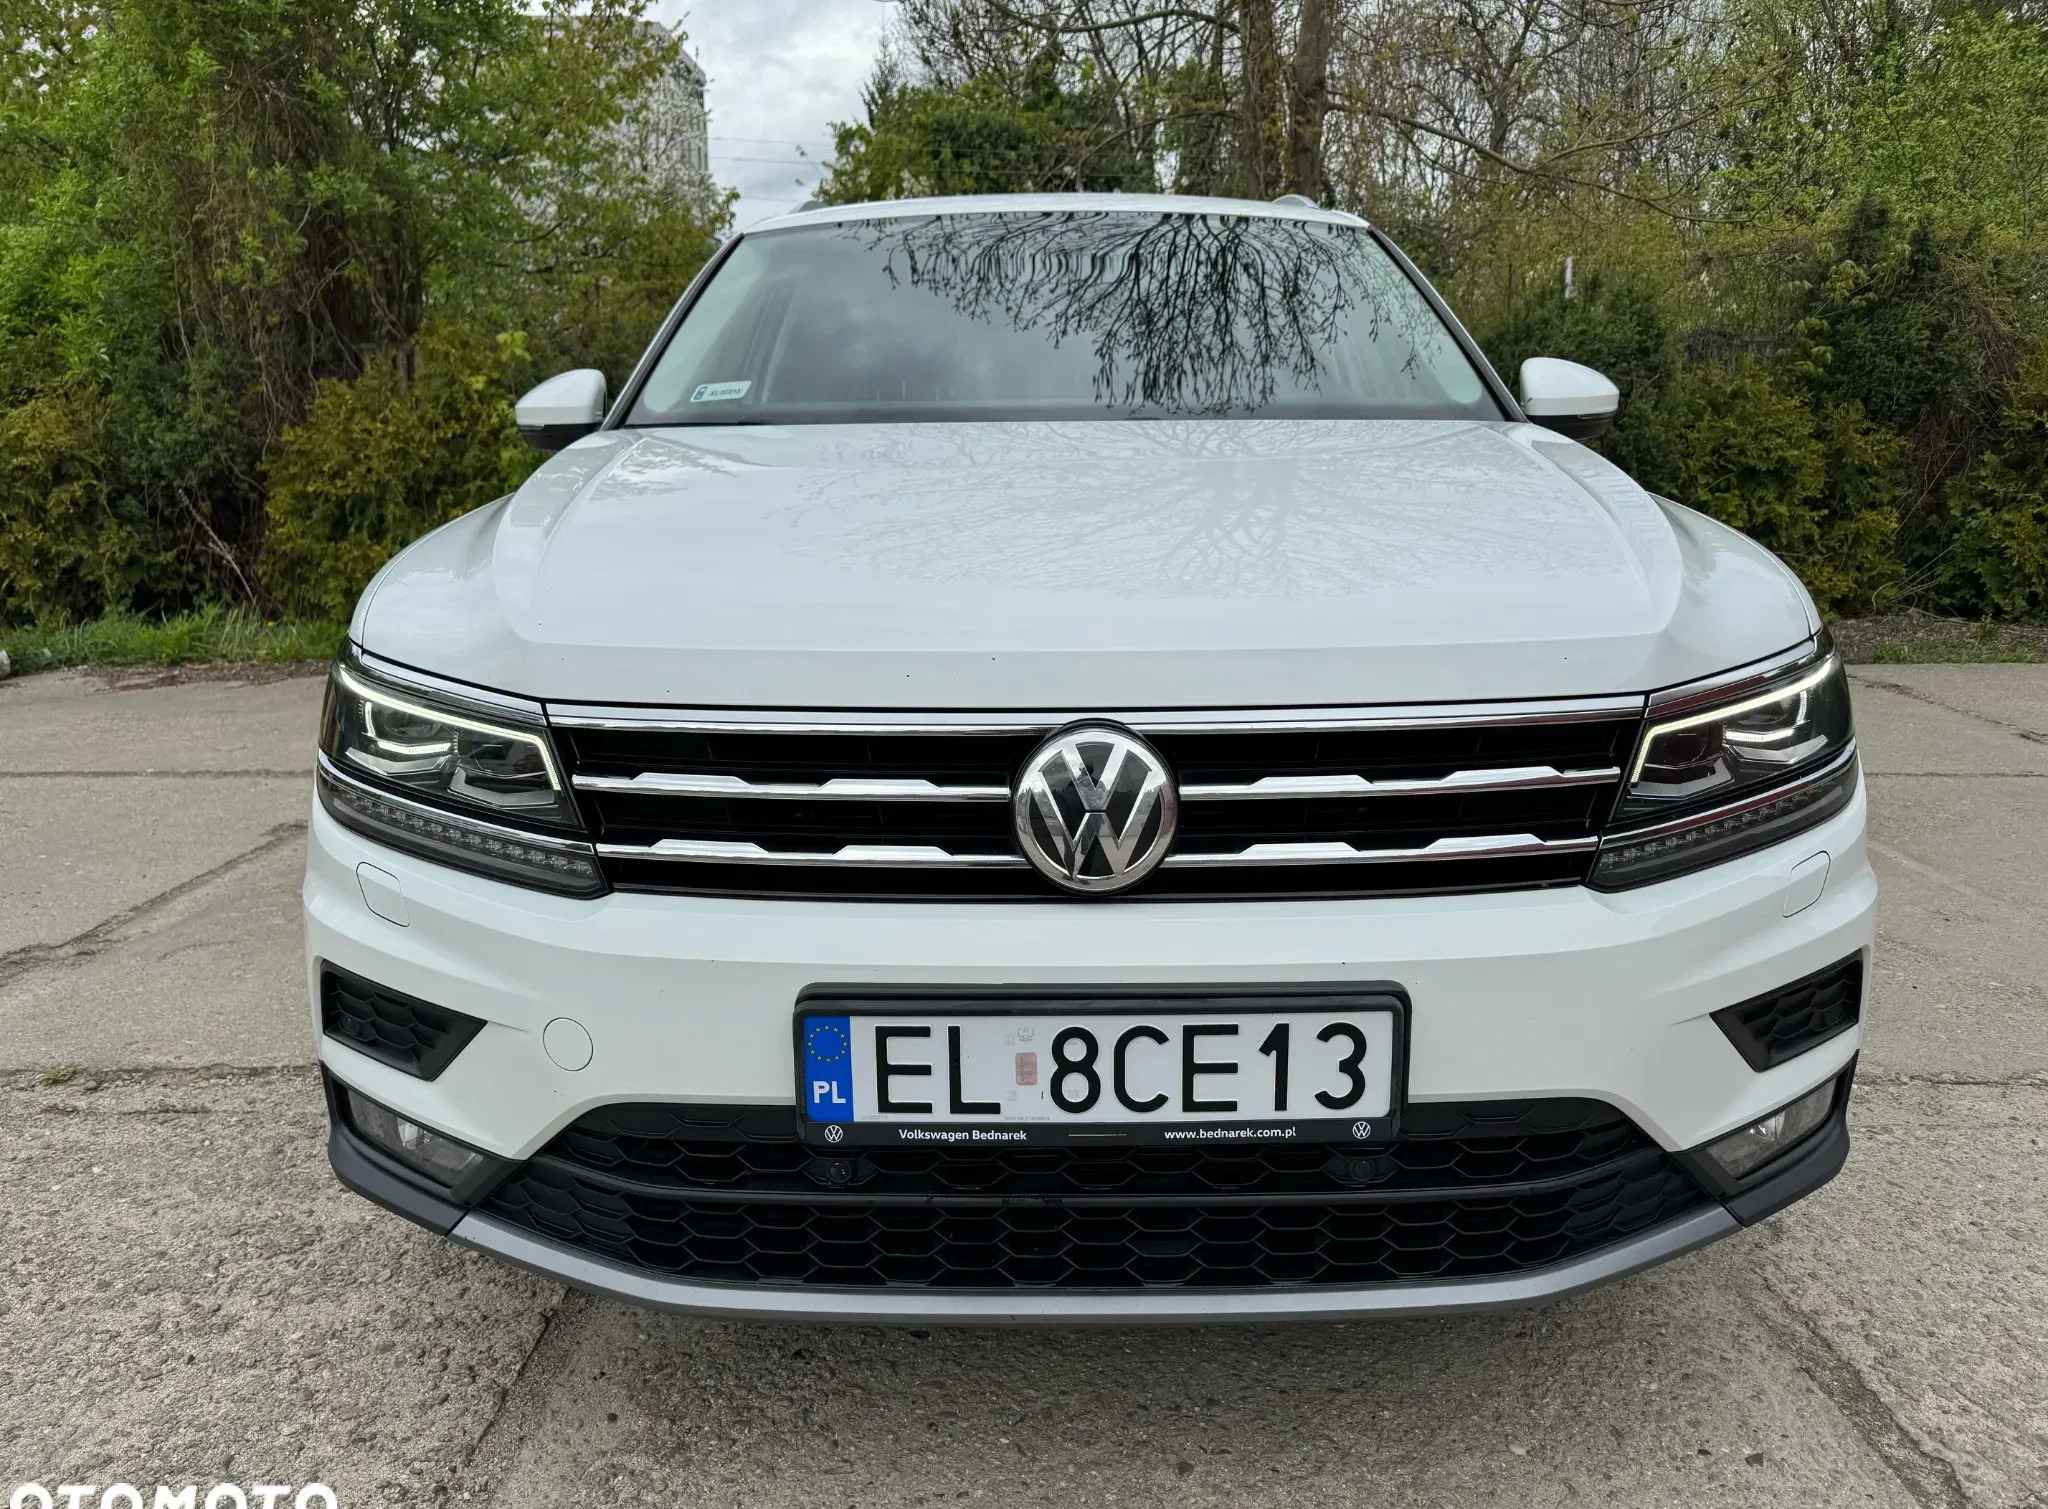 volkswagen Volkswagen Tiguan cena 98000 przebieg: 127000, rok produkcji 2018 z Łódź